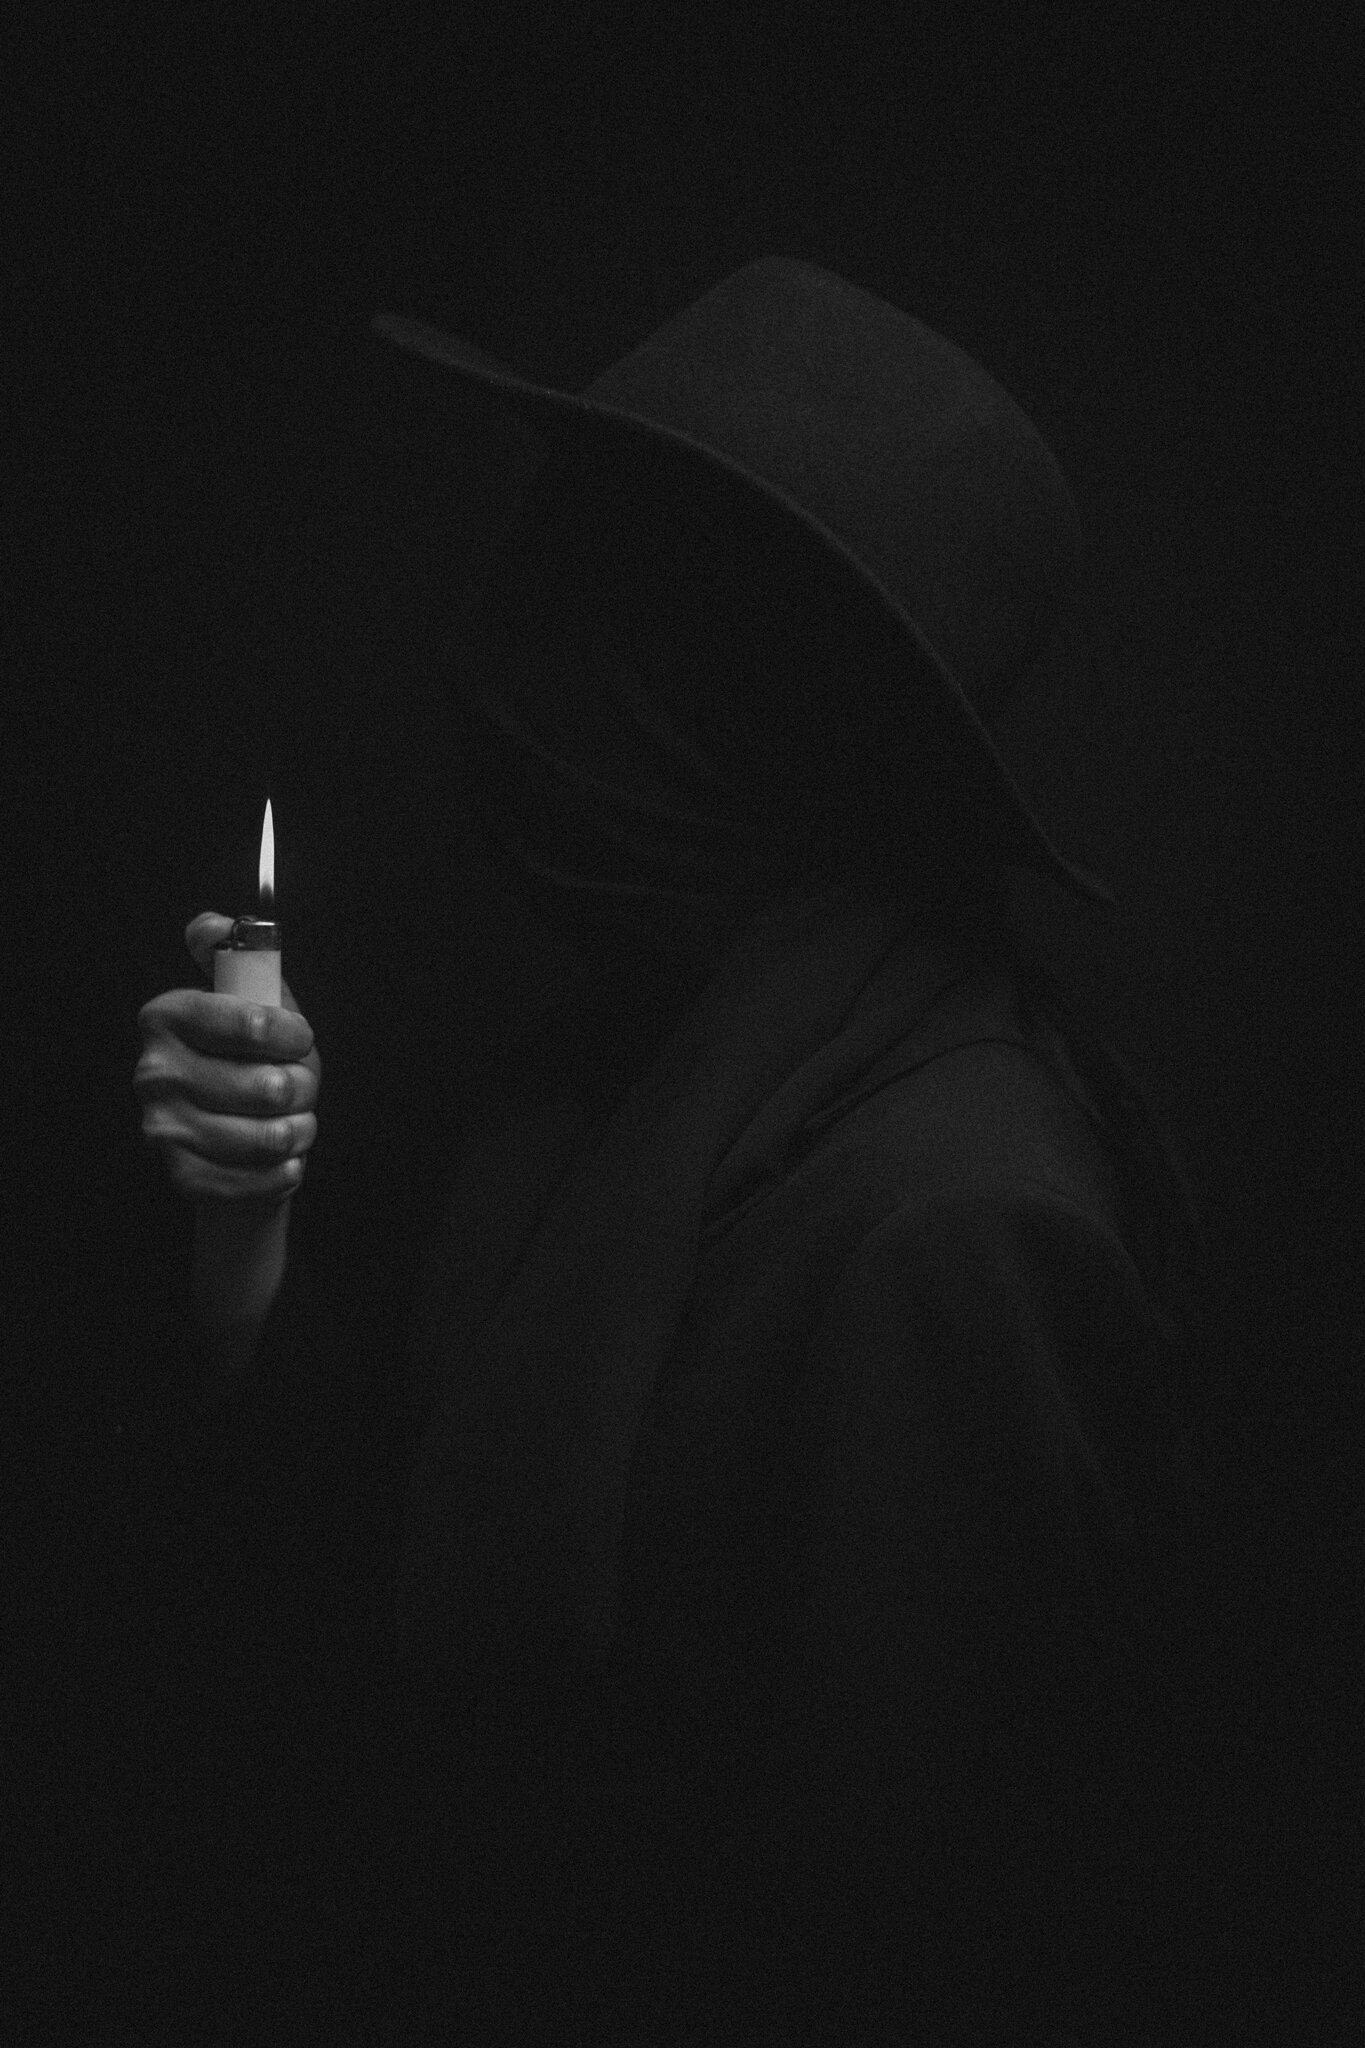 Olga-Tenyanin-Portrait-Photographer-Portland-Oregon-Vancouver-Washington-Spooky-shroud-hat-fire-reaper-death-eerie-10.jpg